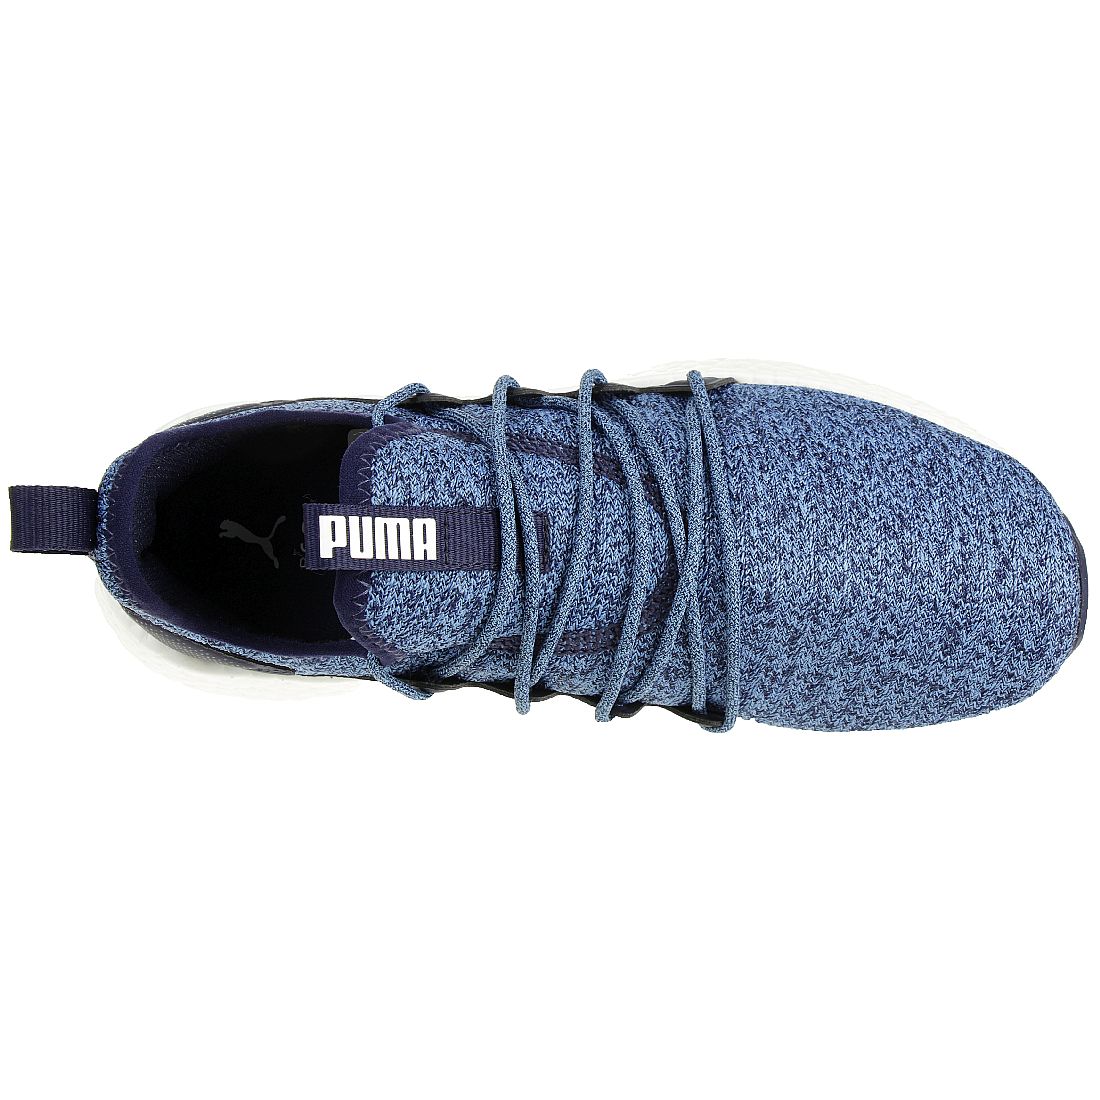 Puma NRGY Neko Knit JR Kinder Unisex Sneaker Schuh Blau 191747 10